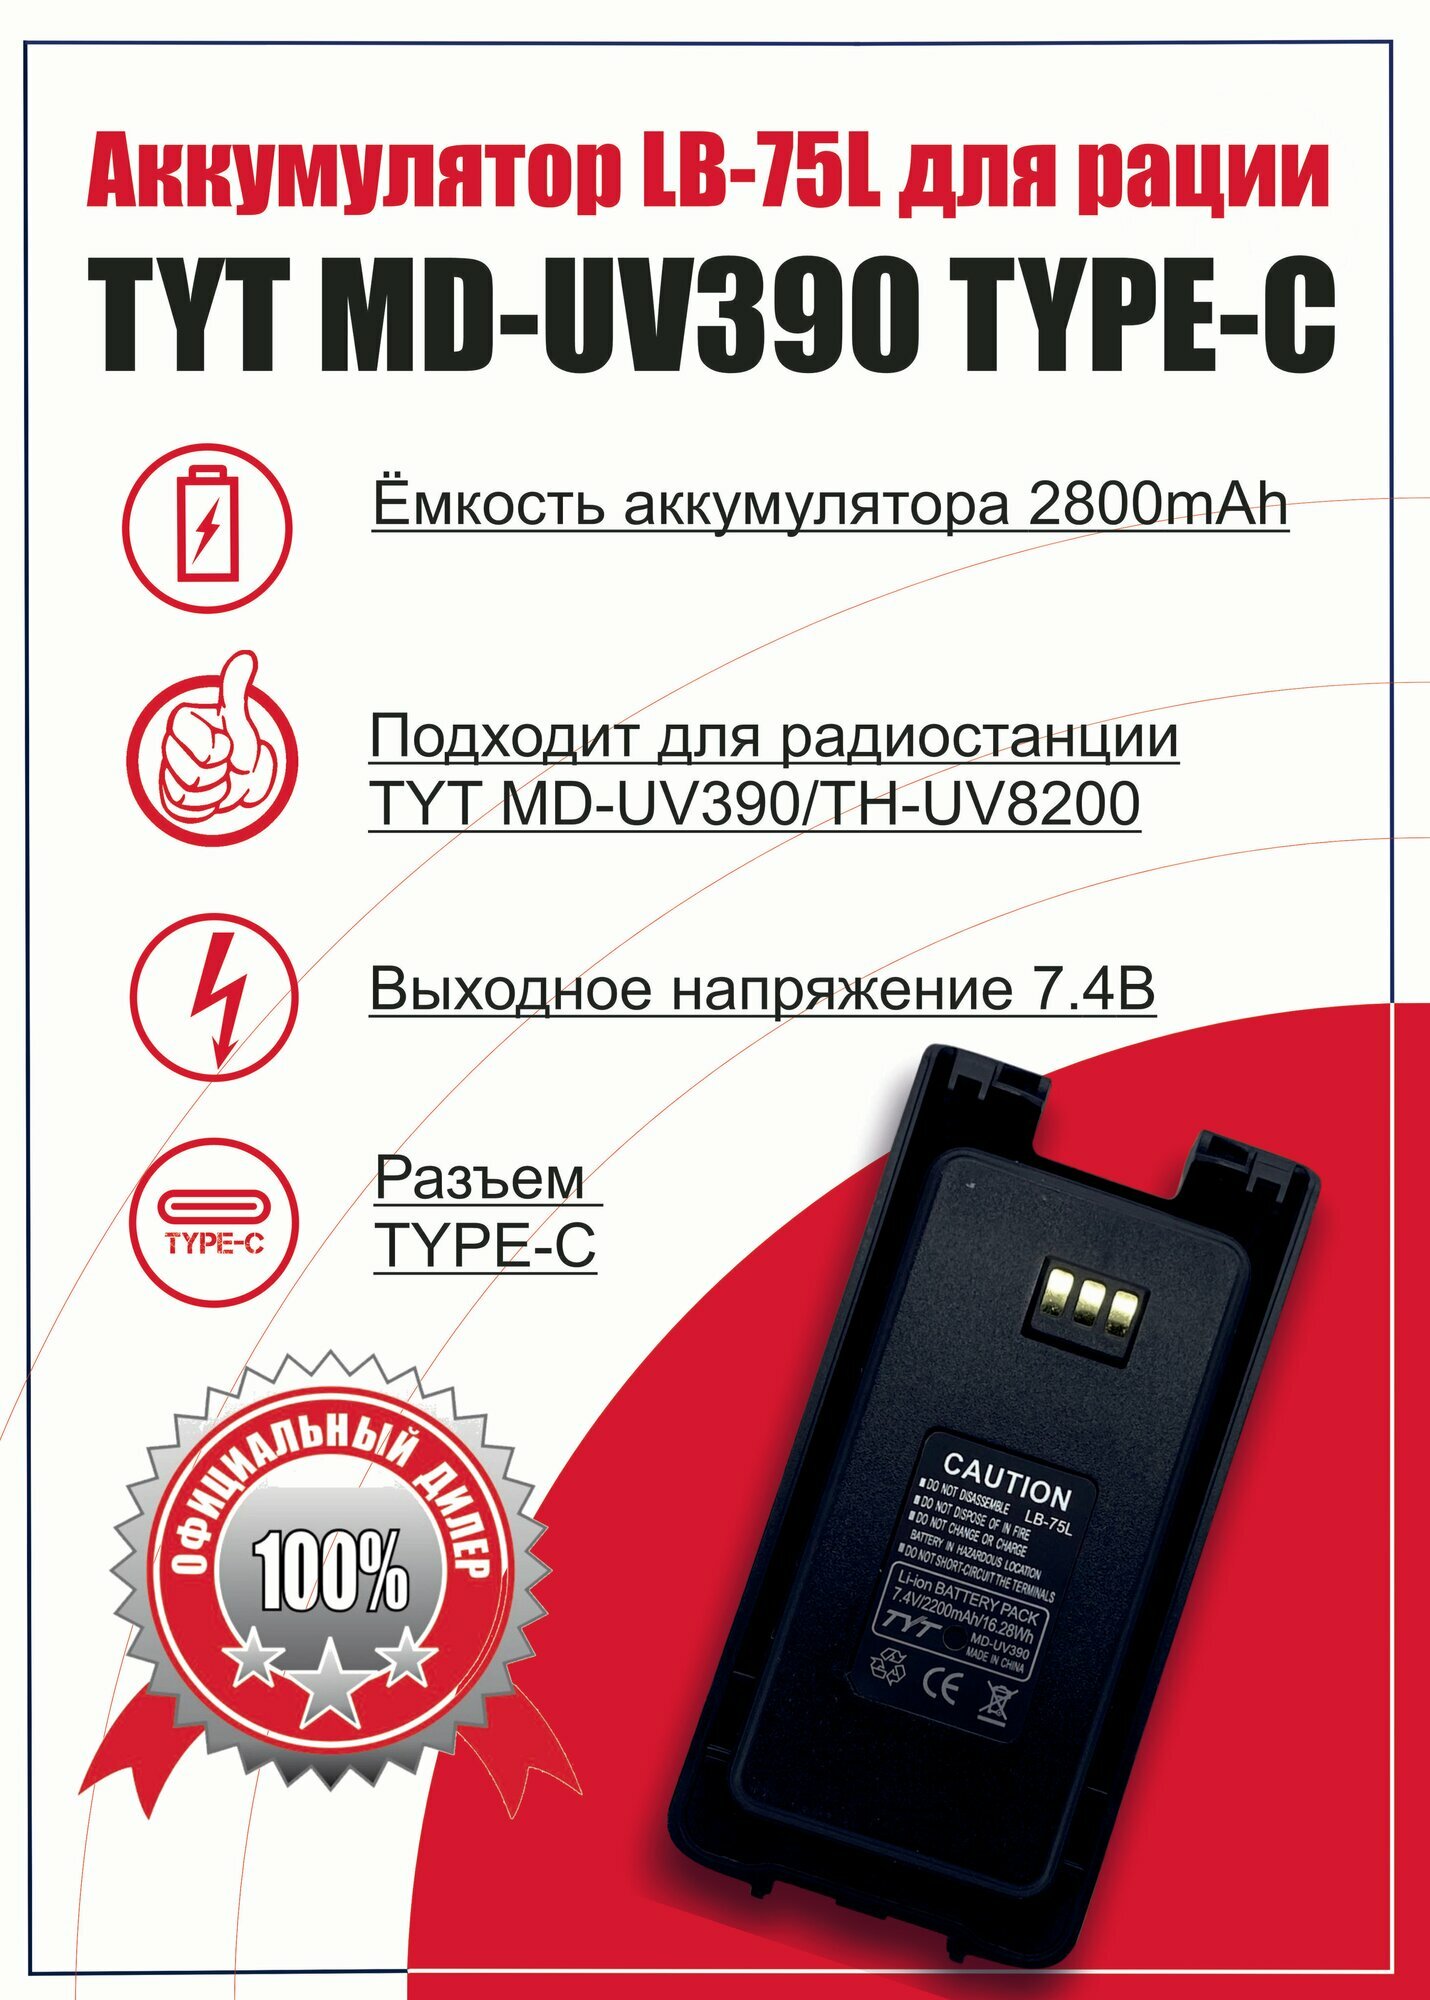 Аккумулятор для рации TYT MD-UV390 2800mAh TYPE-C